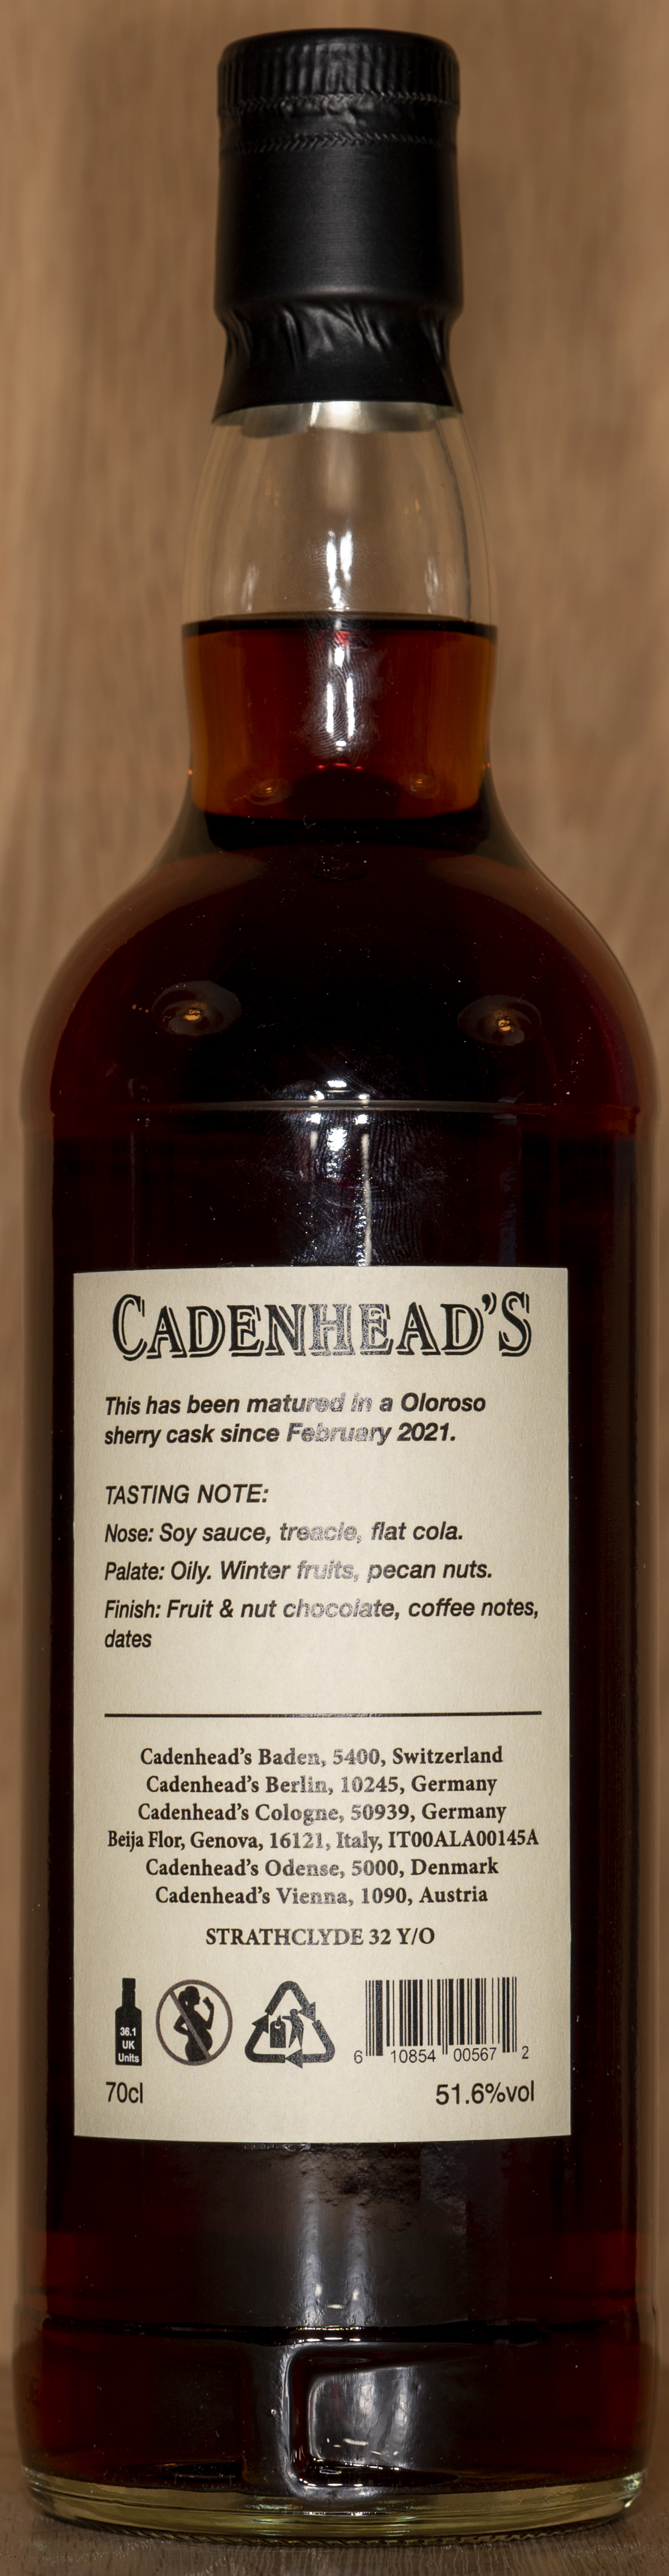 Billede: DSC_5034 - Cadenheads Sherry Cask Strathclyde 32 - bottle back.jpg